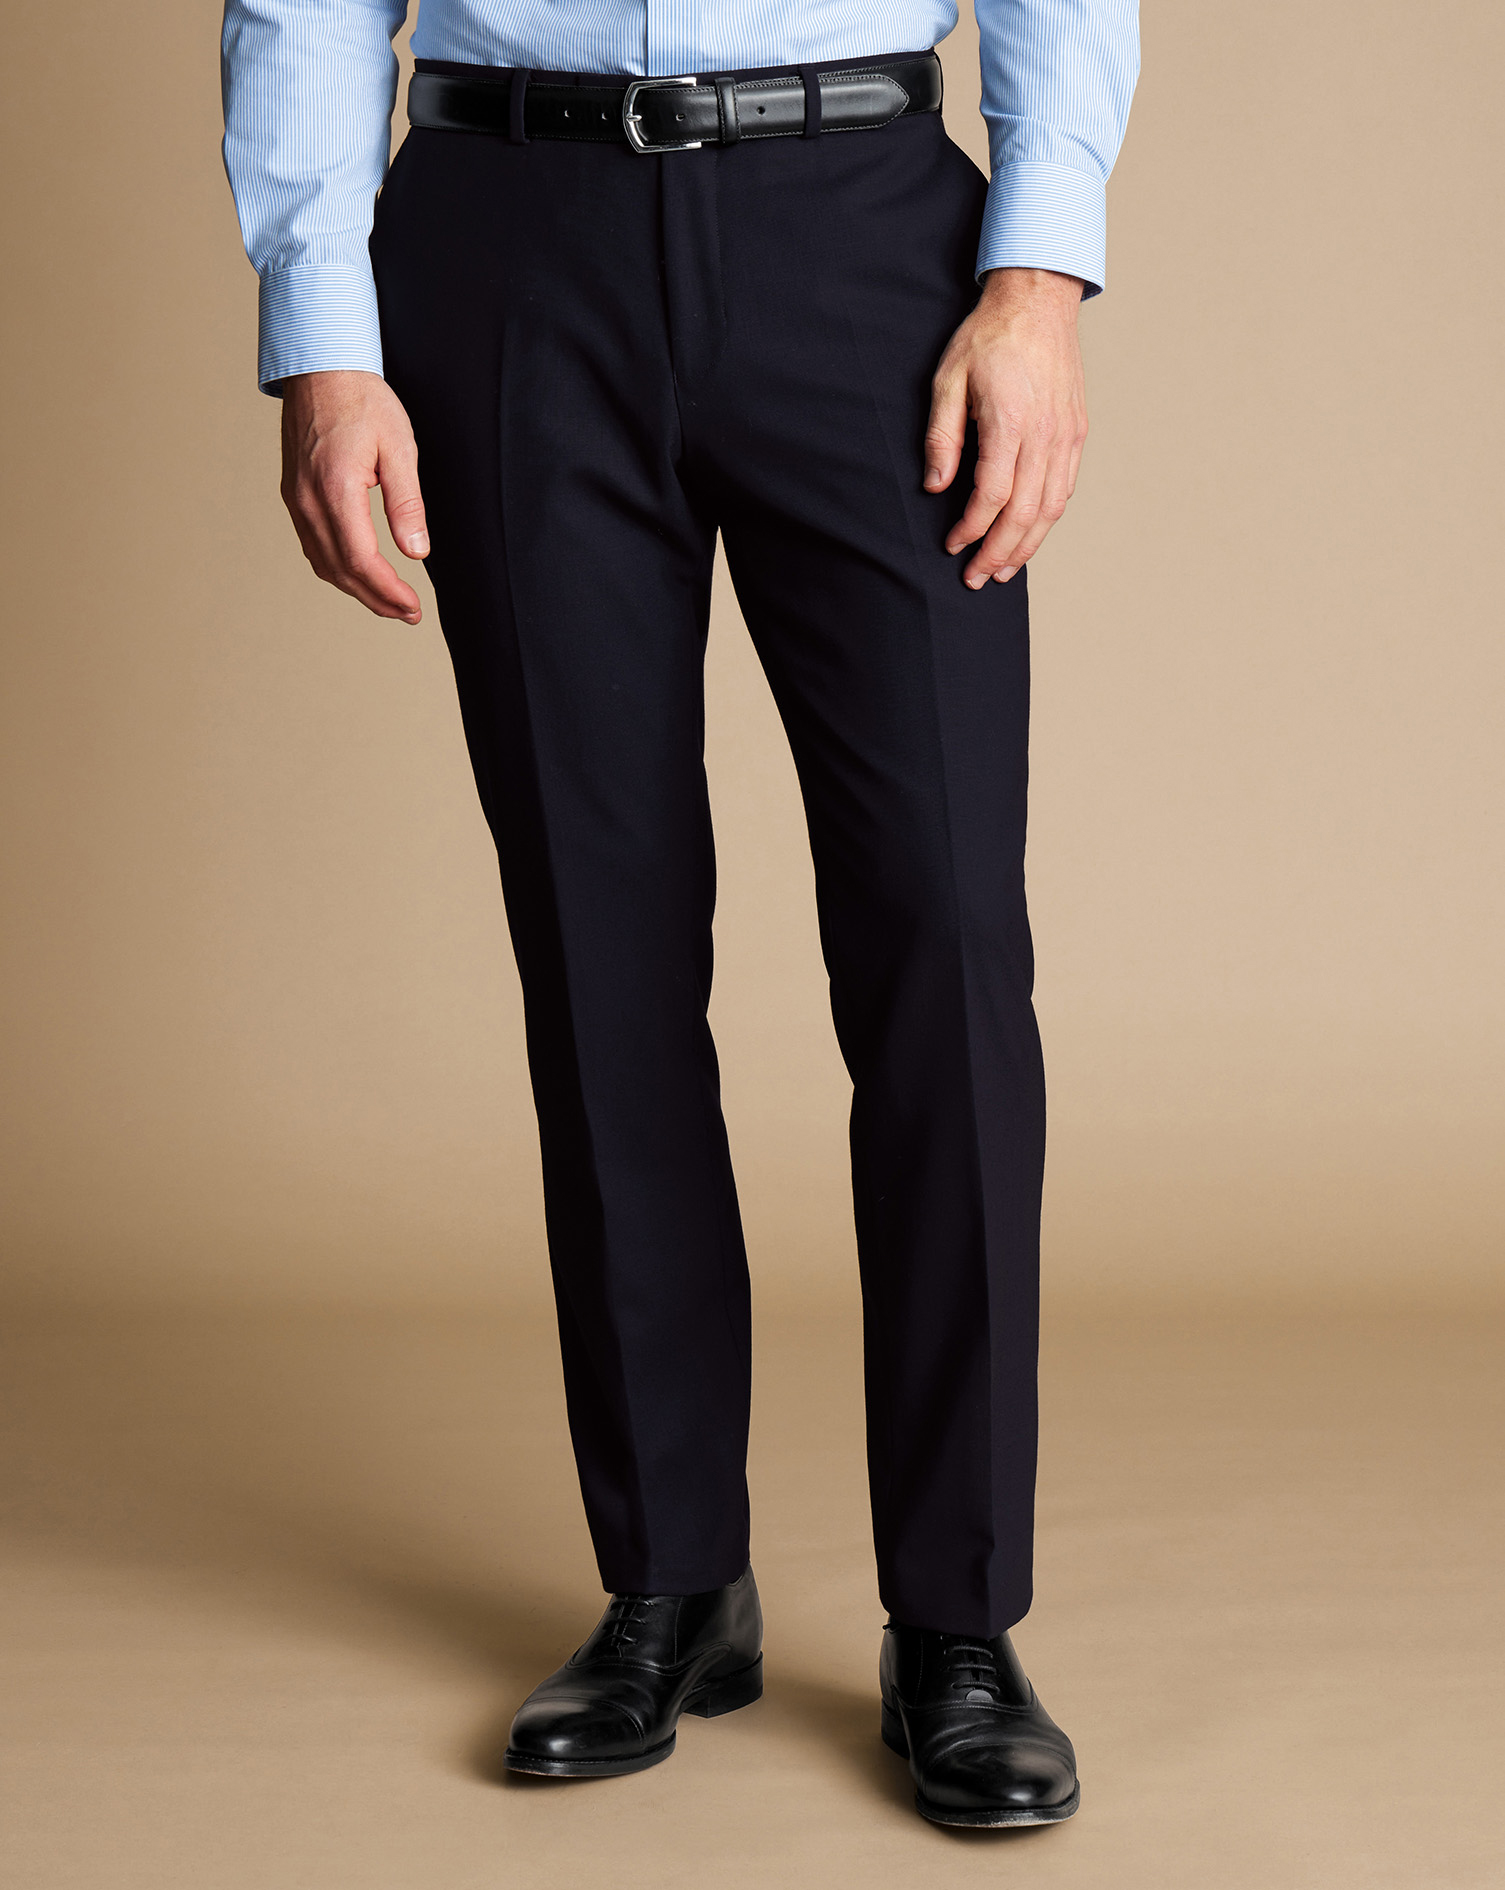 Men's Charles Tyrwhitt Ultimate Performance Suit Trousers - Dark Navy Blue Size 36/32 Wool
